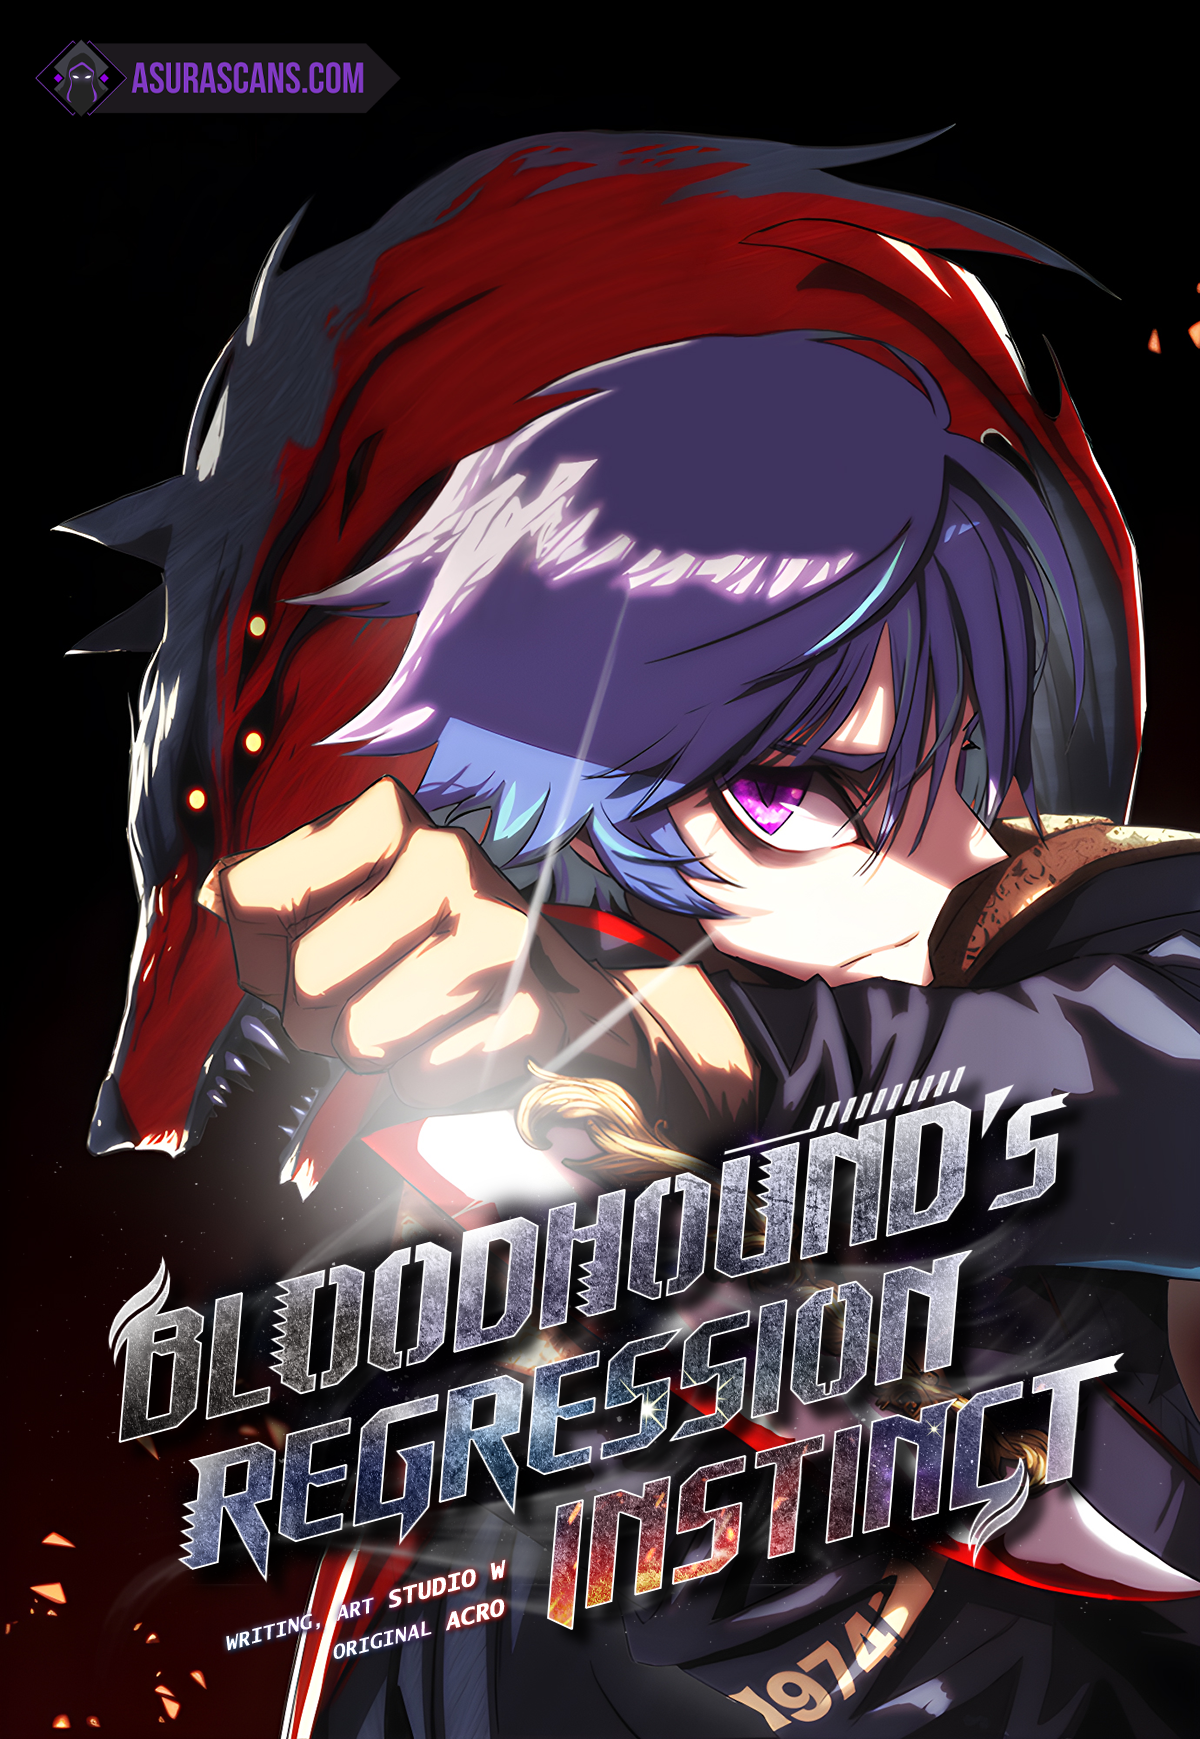 Bloodhound’s Regression Instinct cover image